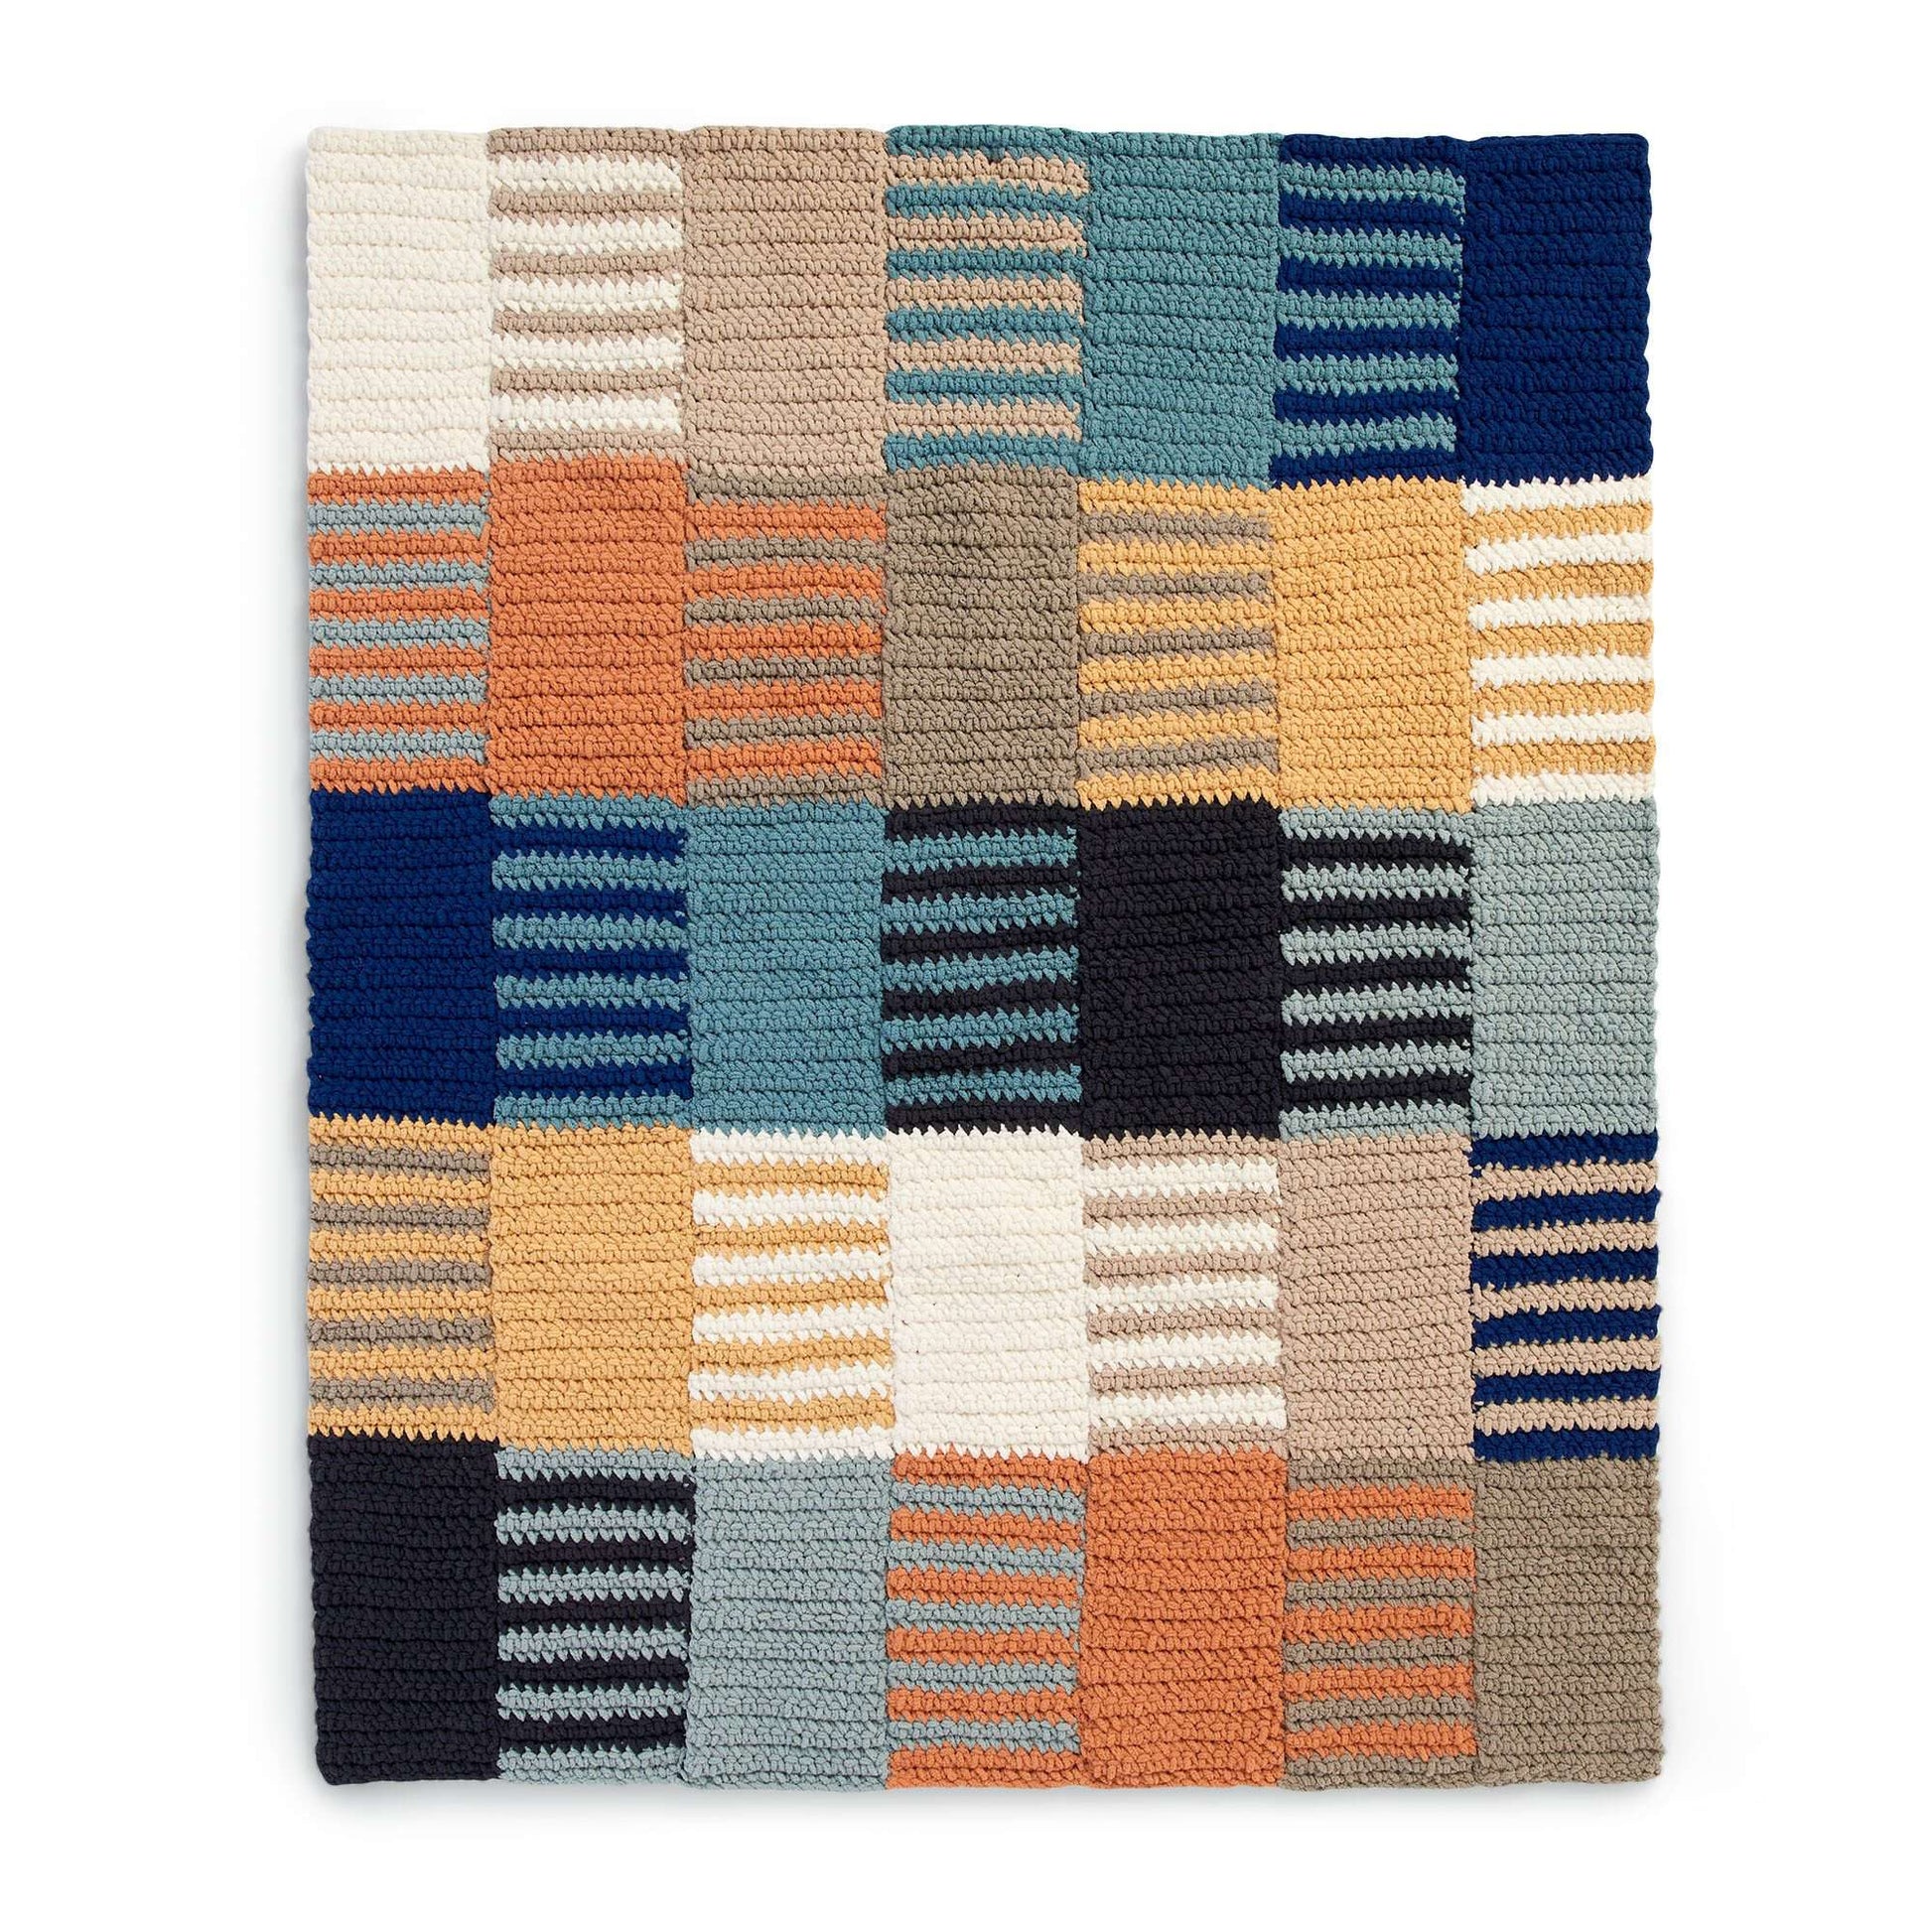 Free Bernat Interlocking Color Block Crochet Blanket Pattern